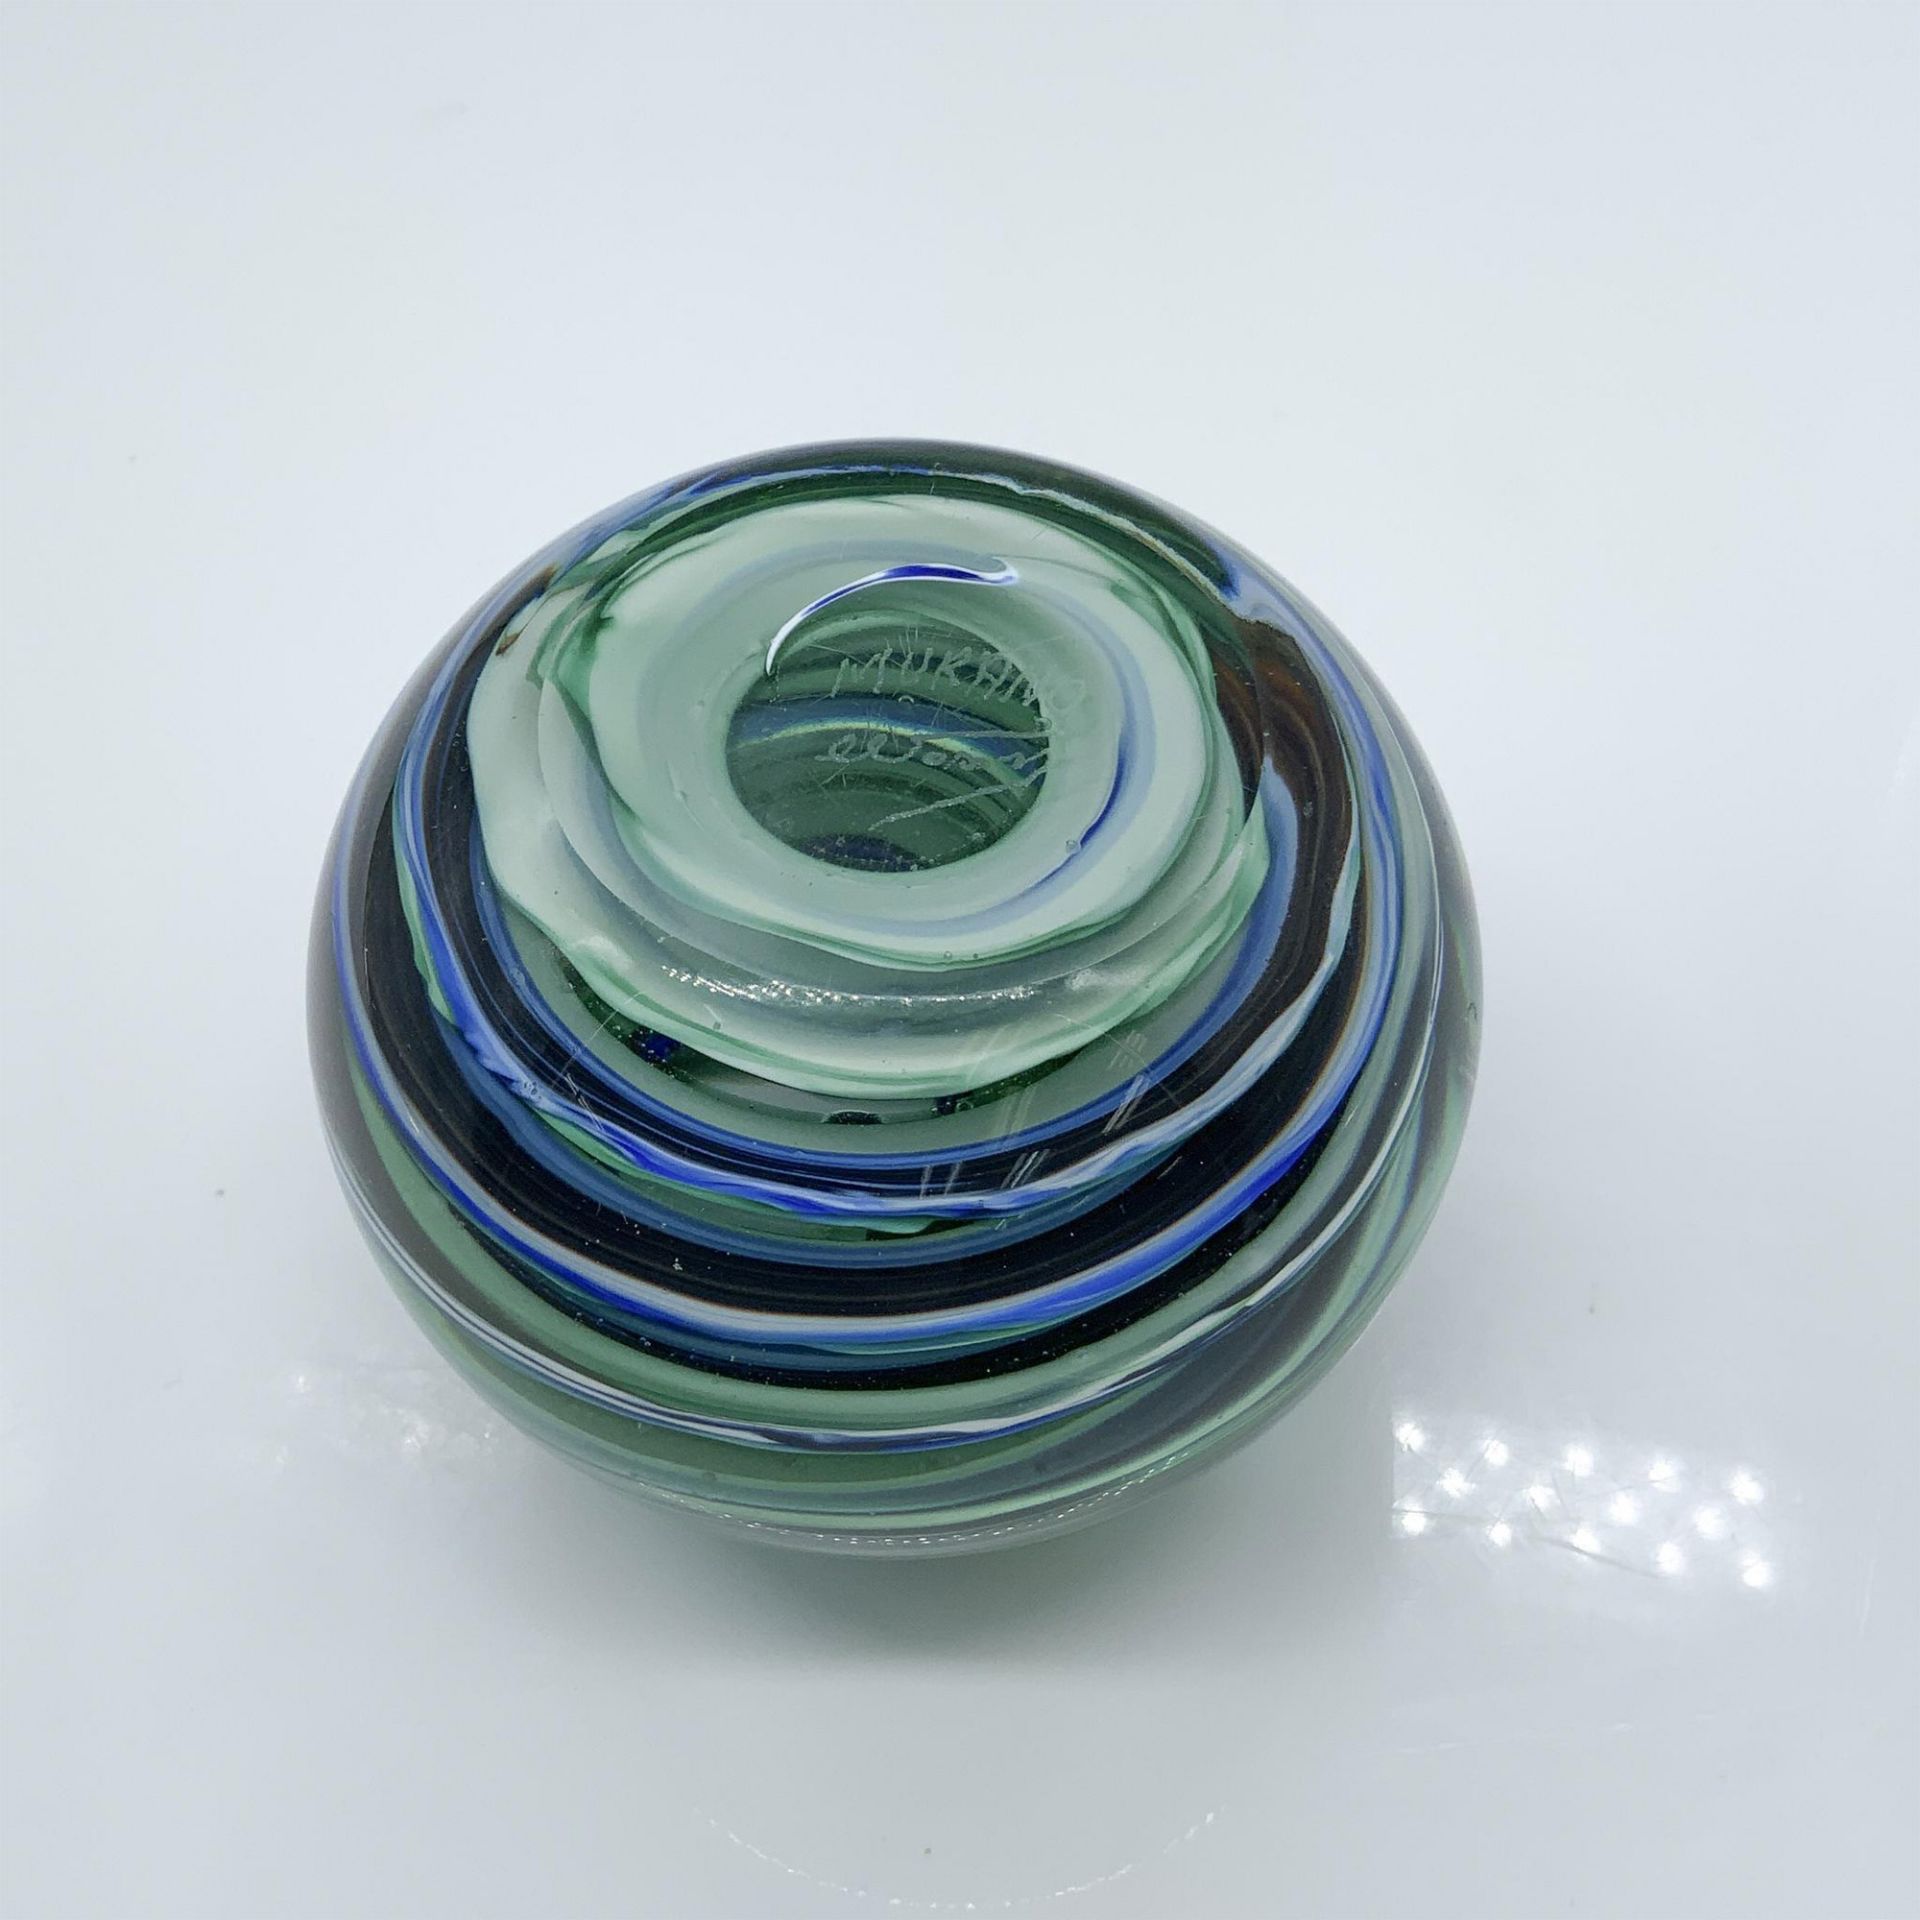 Murano Glass Blue & Green Swirl Paperweight, Signed - Image 4 of 4